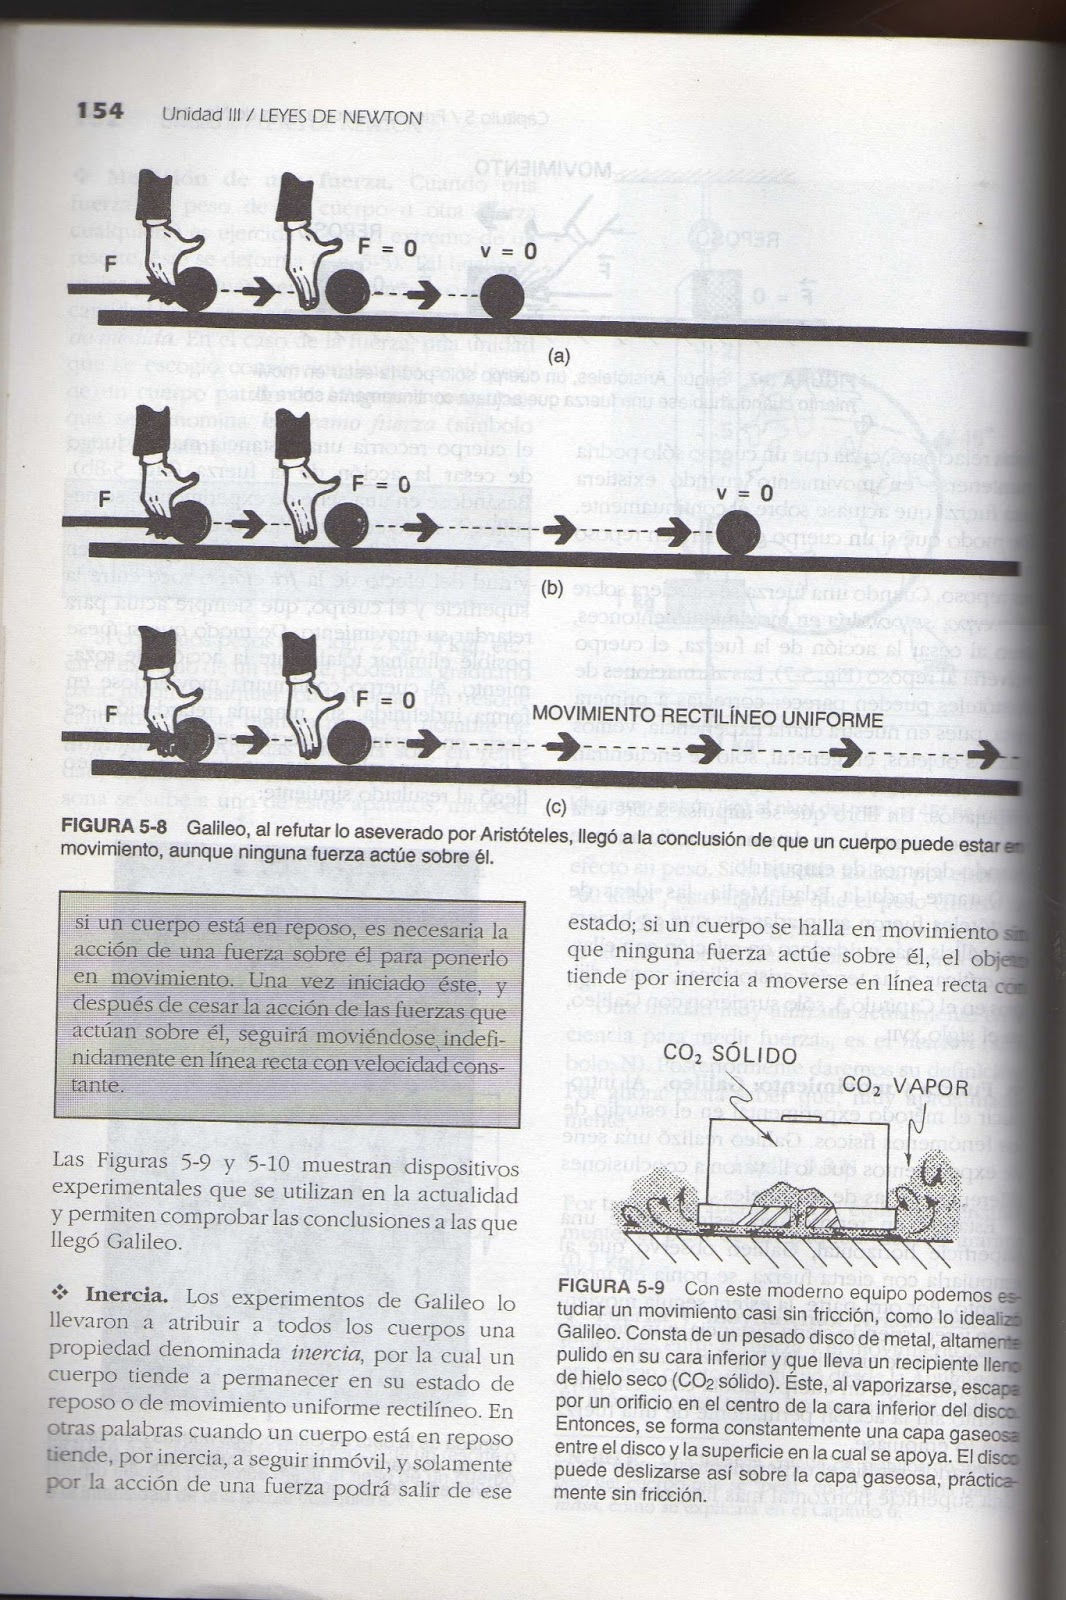 libro de fisica general alvarenga pdf free